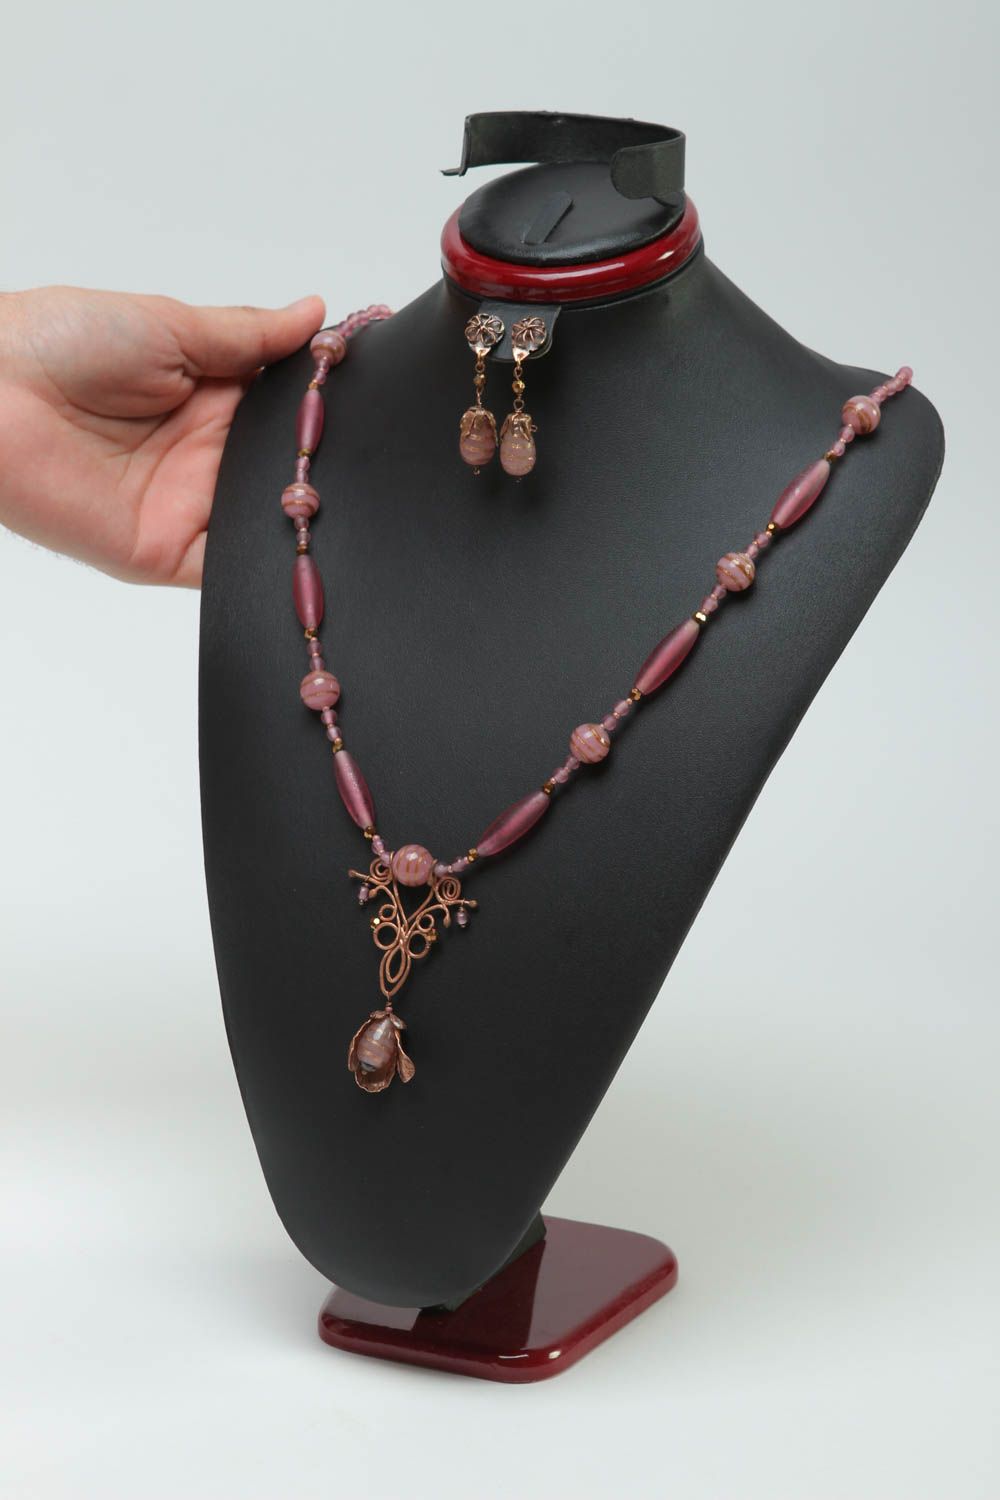 Handmade metal pendant metal earrings bead necklace wire wrap jewelry set photo 2